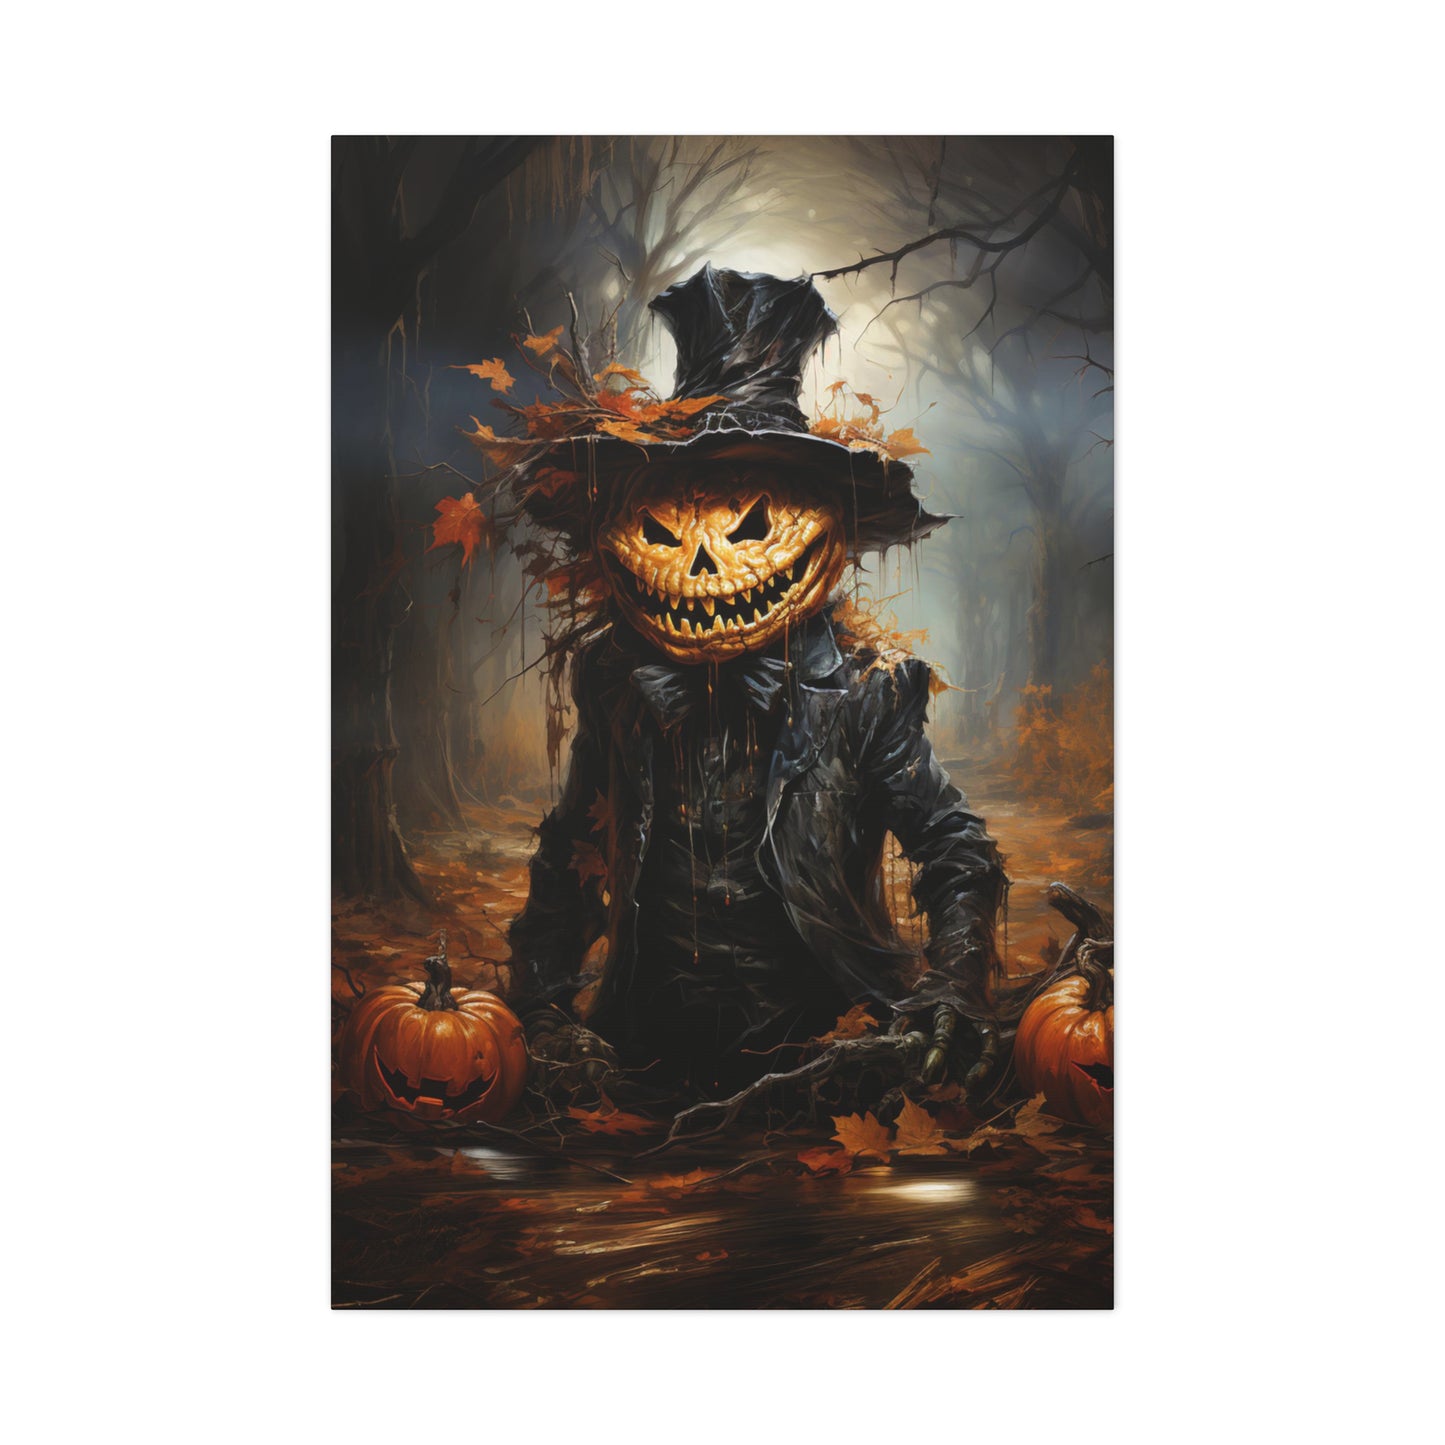 Pumpkin Head Canvas Print Halloween Jack-o-Lantern Wall Decor Art Gifts